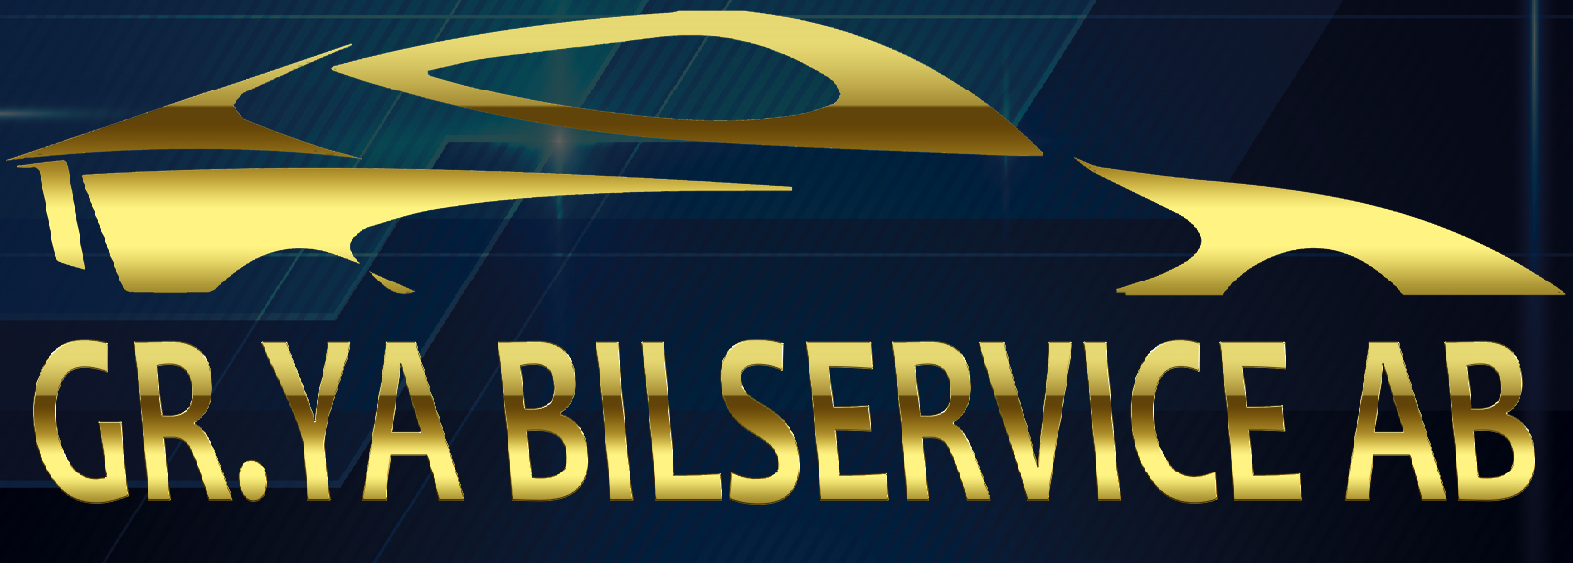 GR.YA Bilservice AB logo